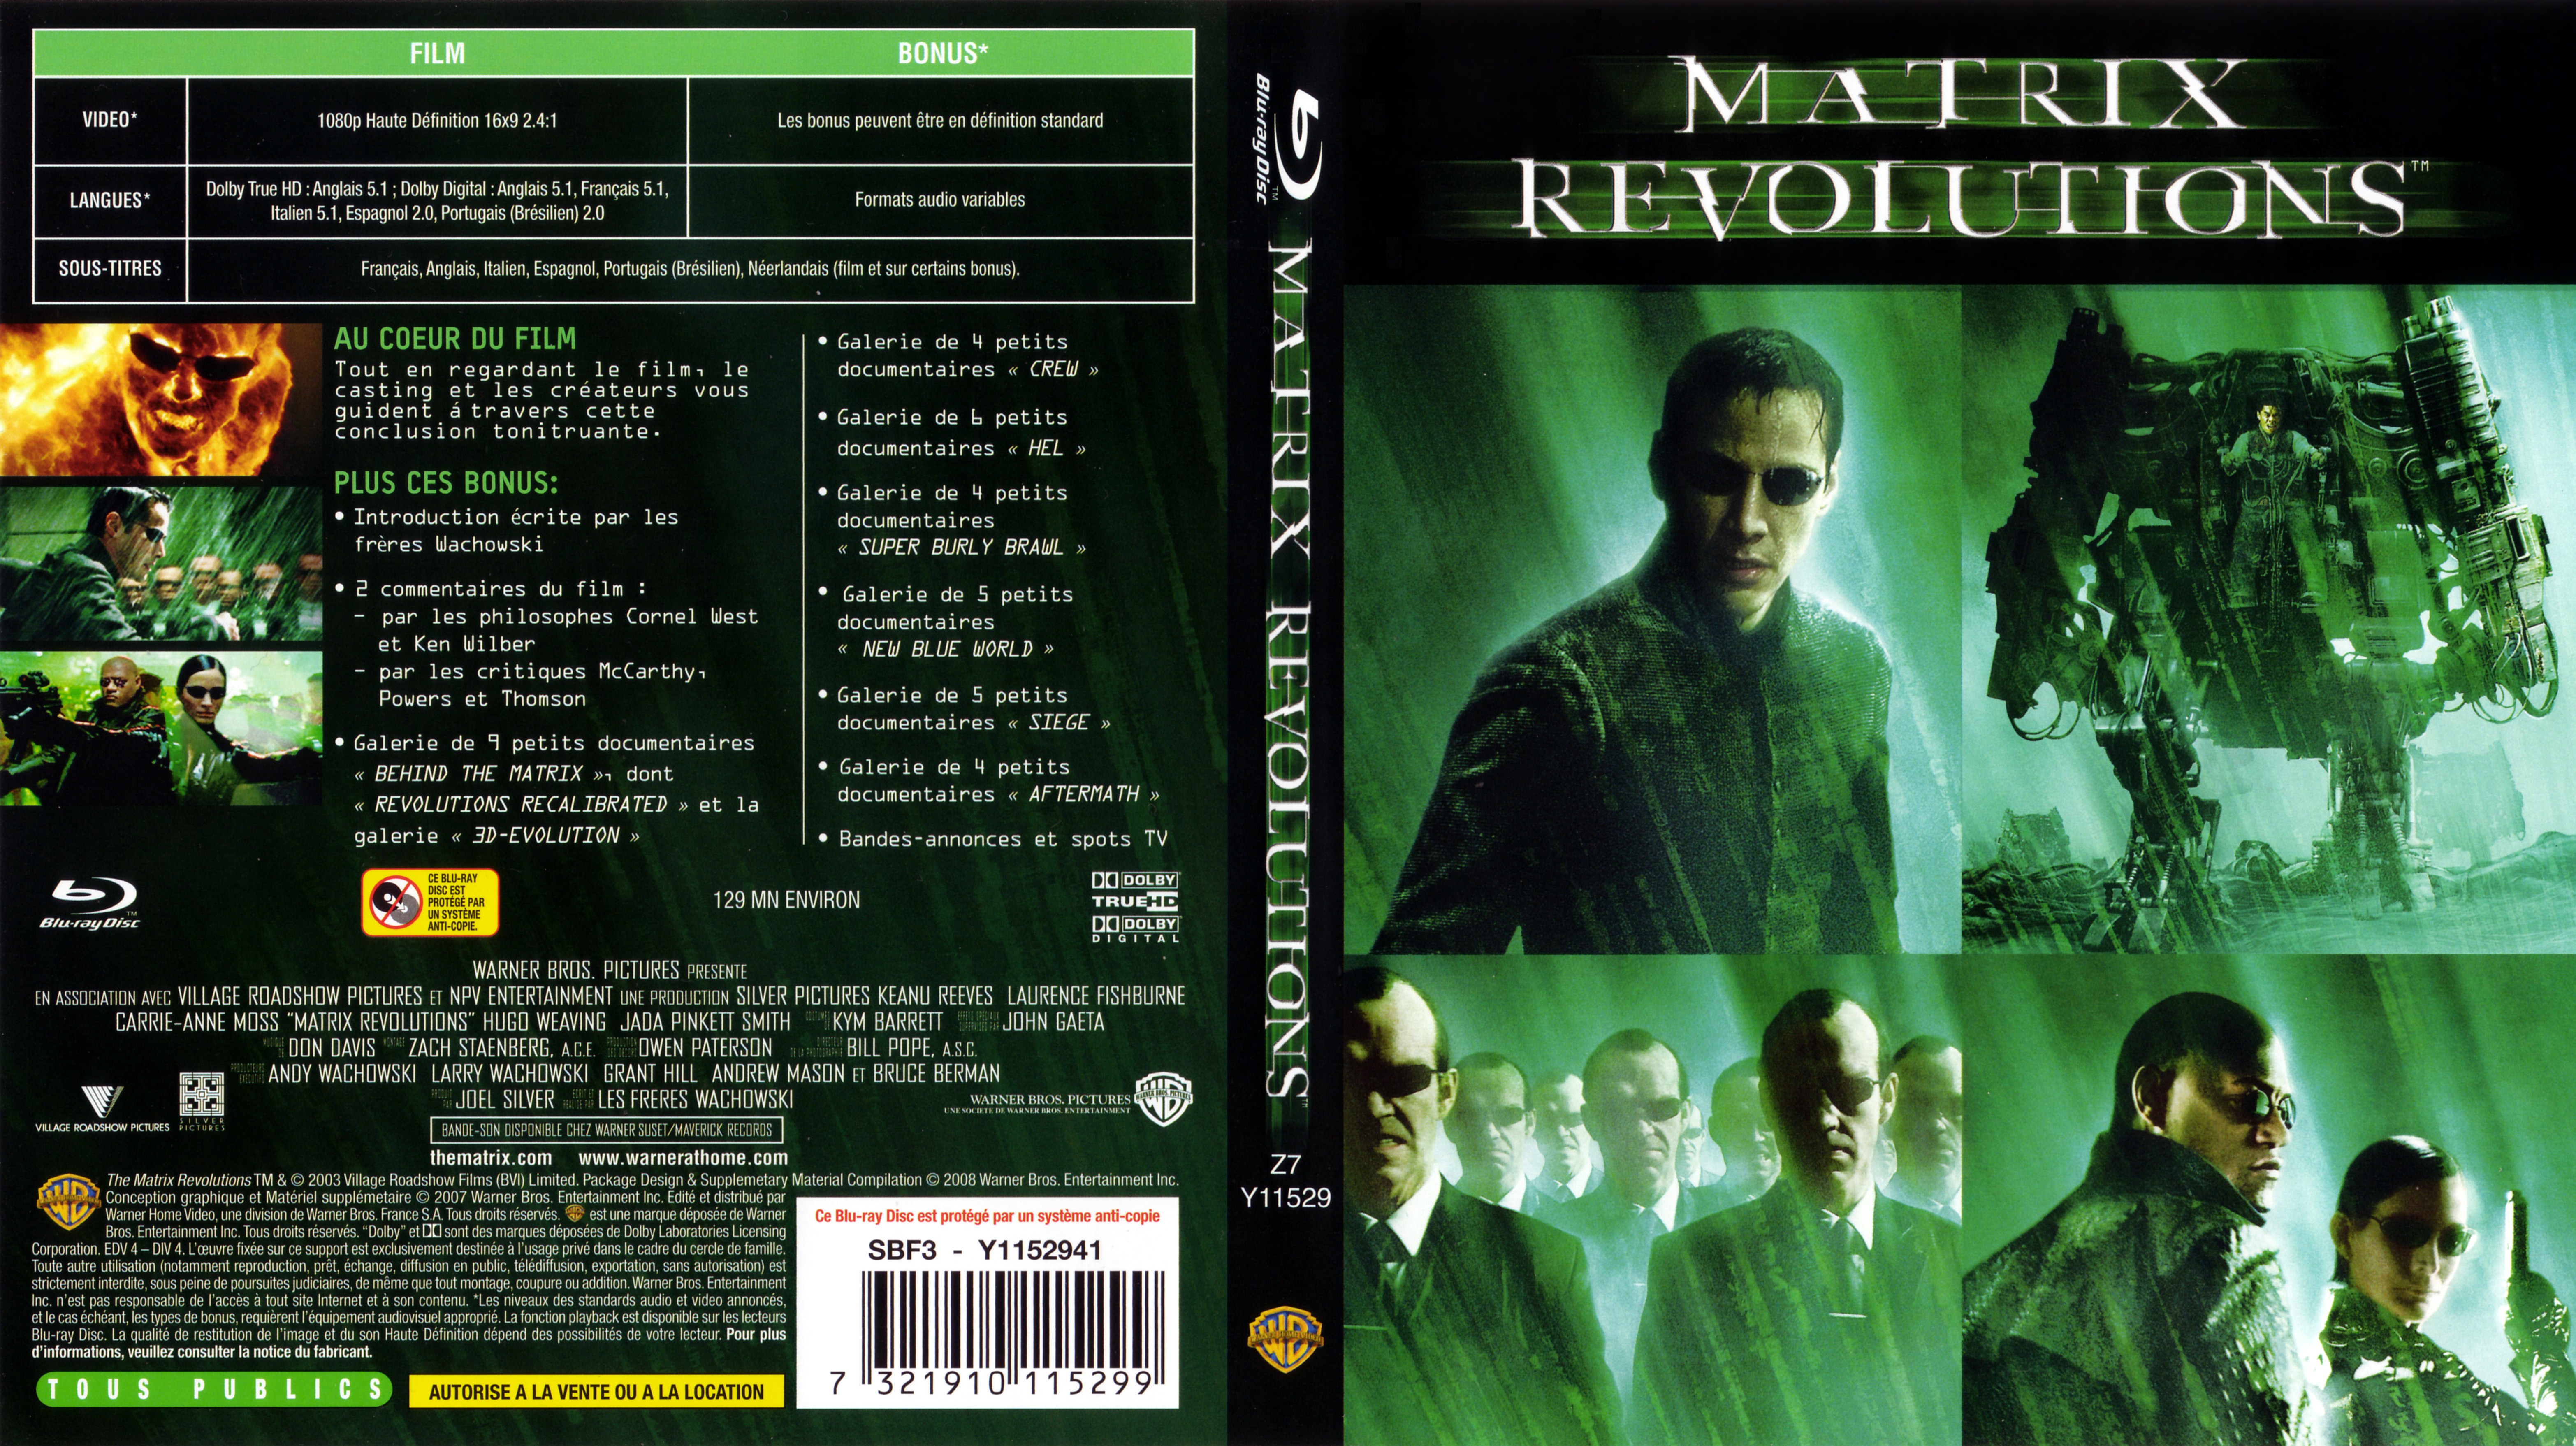 Jaquette DVD Matrix revolutions (BLU-RAY)